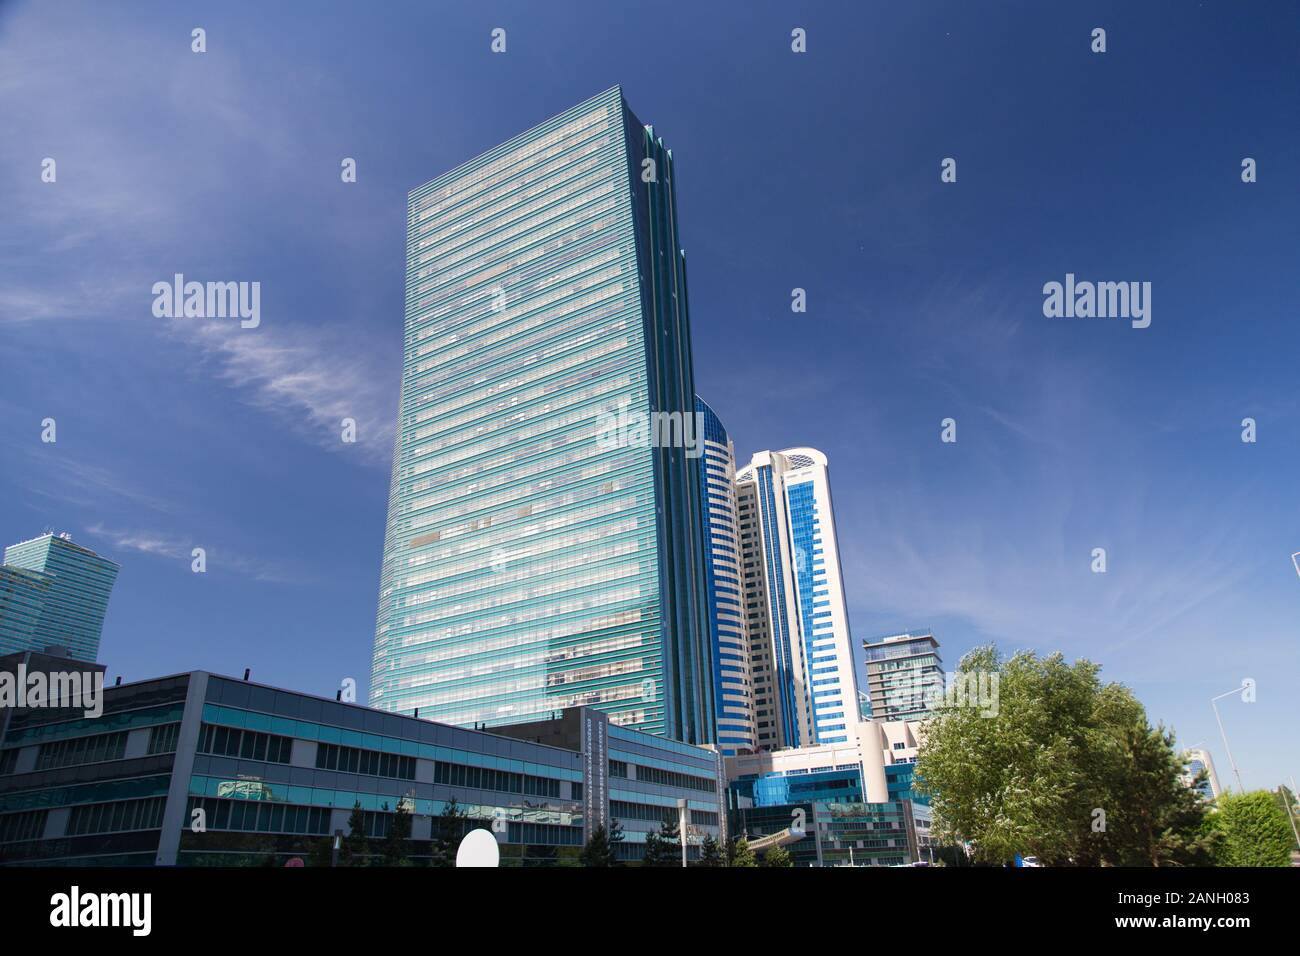 Skyscrapers - modern office buildings in Nur-sultan, Kazakhstan Stock Photo